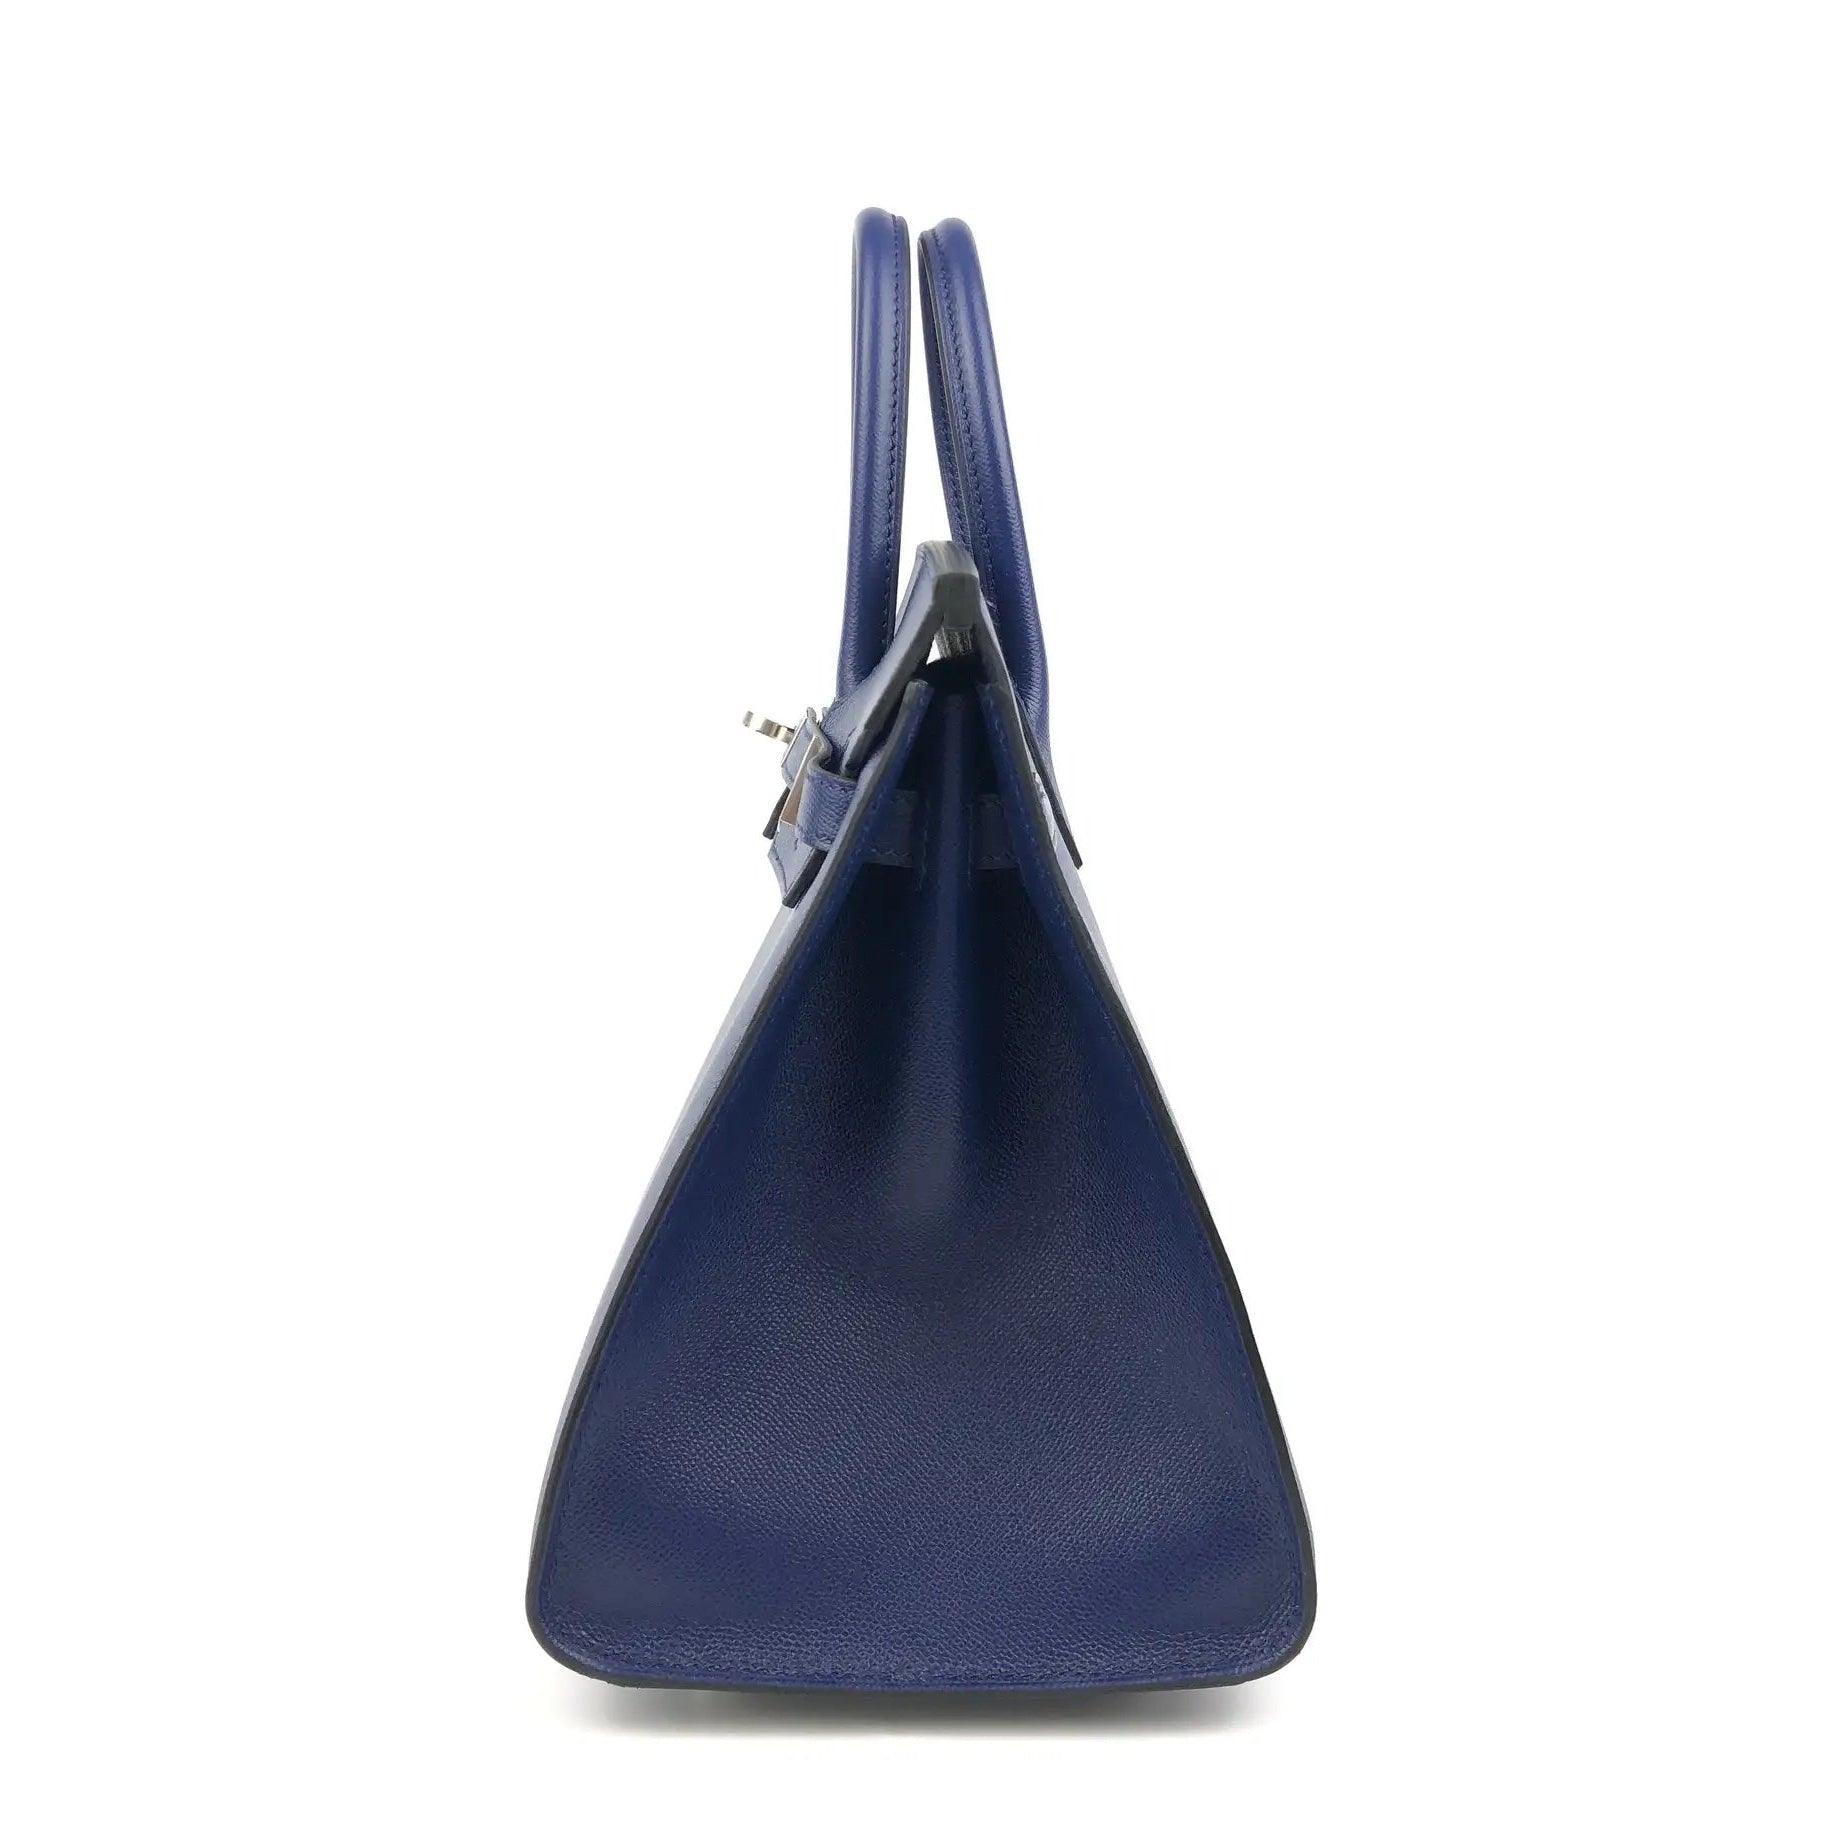 Hermès - Authenticated Birkin 25 Handbag - Leather Blue Plain for Women, Never Worn, with Tag